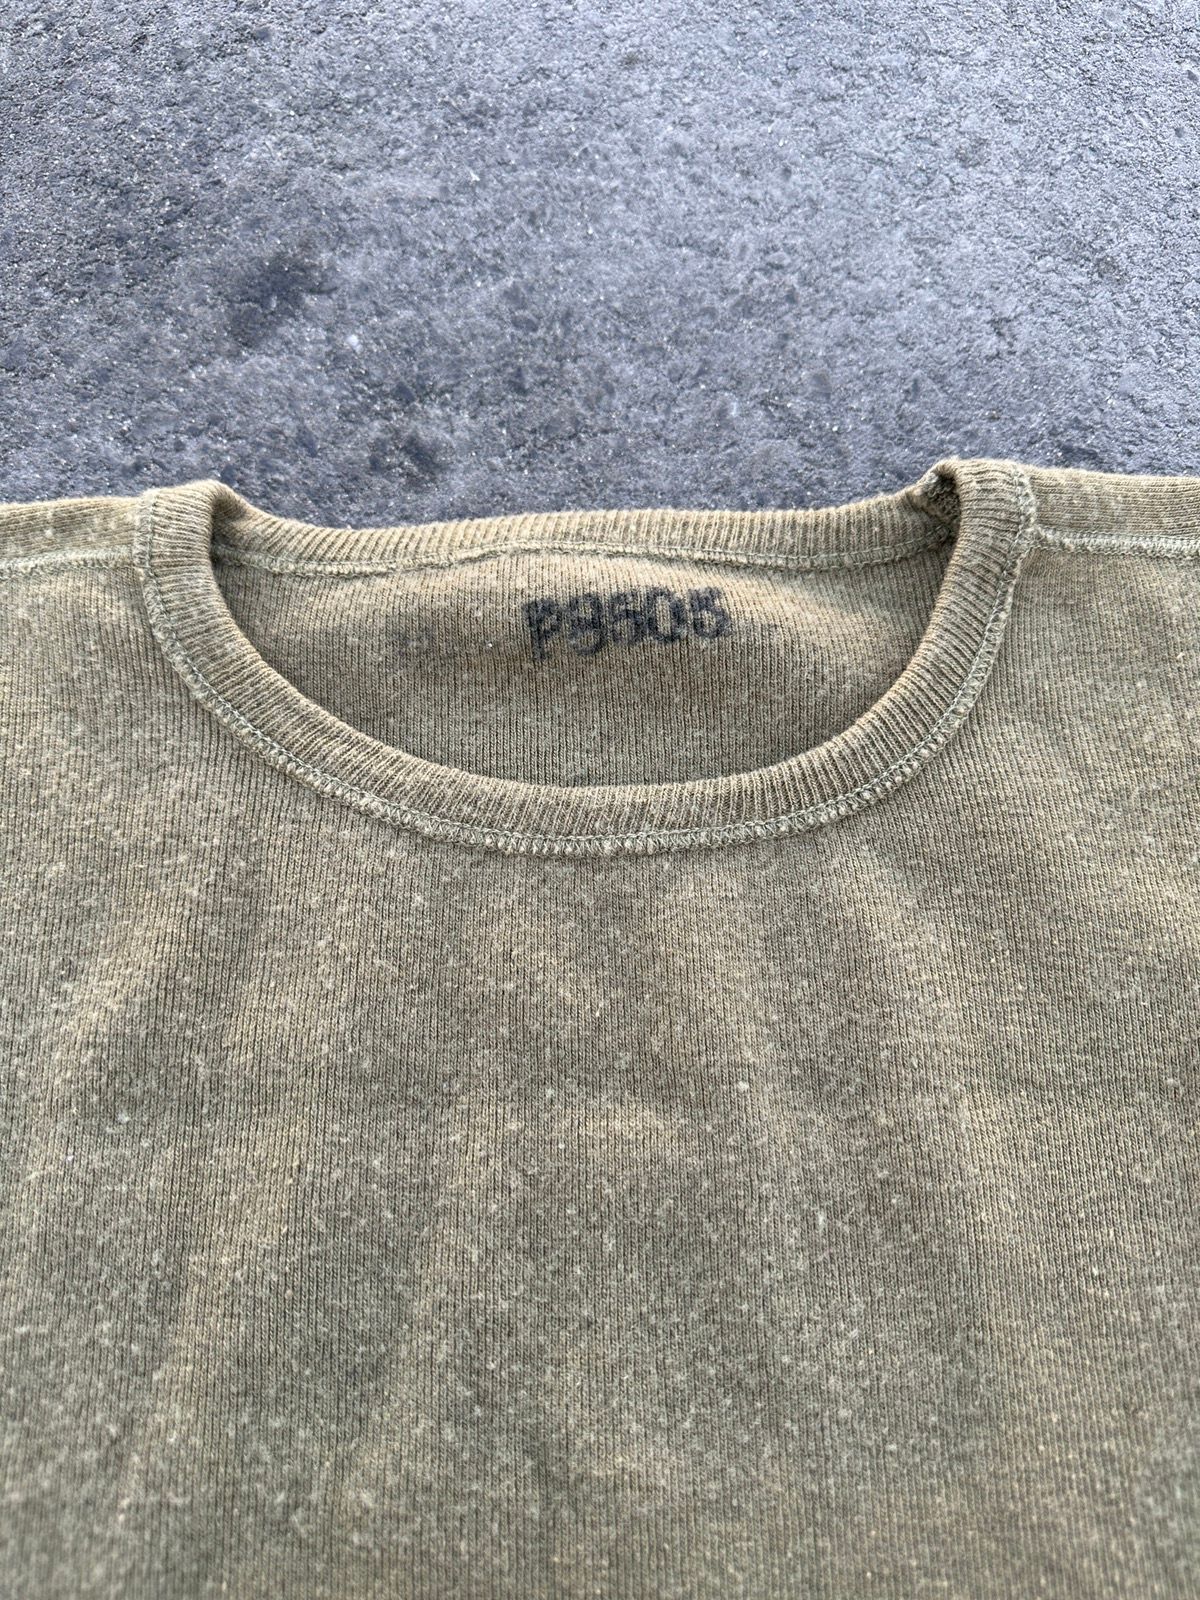 Vintage 40s WW2 Long Sleeve Thermal Shirt Size US M / EU 48-50 / 2 - 4 Thumbnail